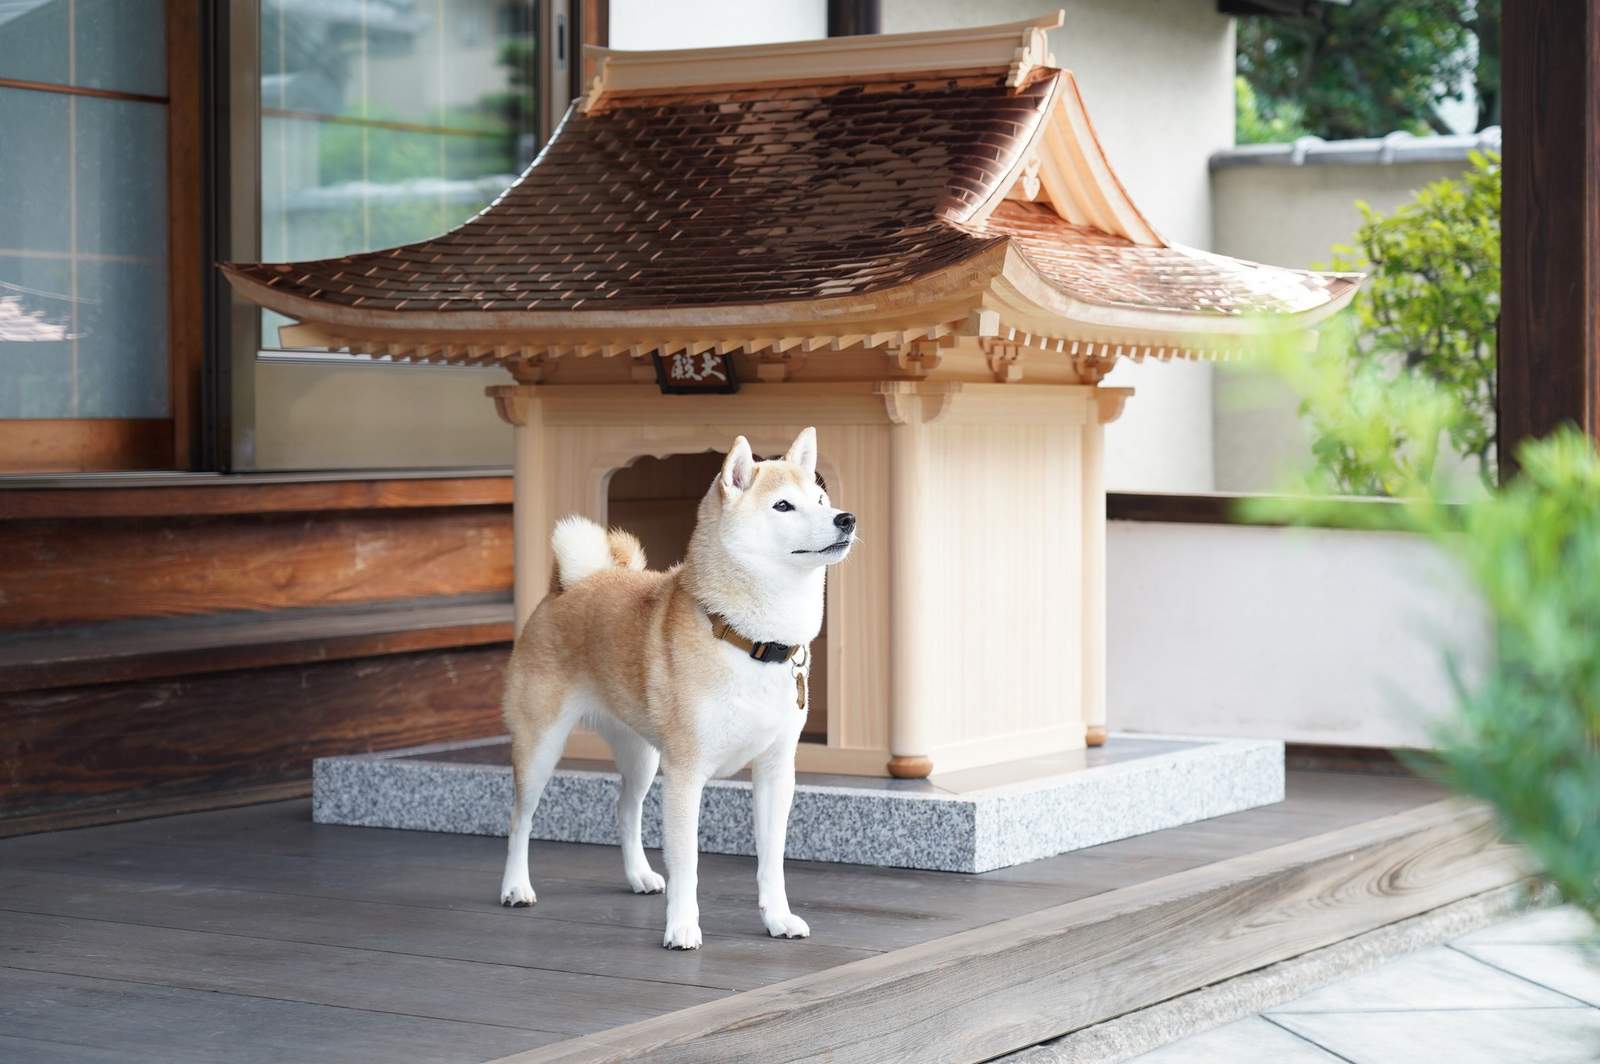 Hiraku built a new house for his pets